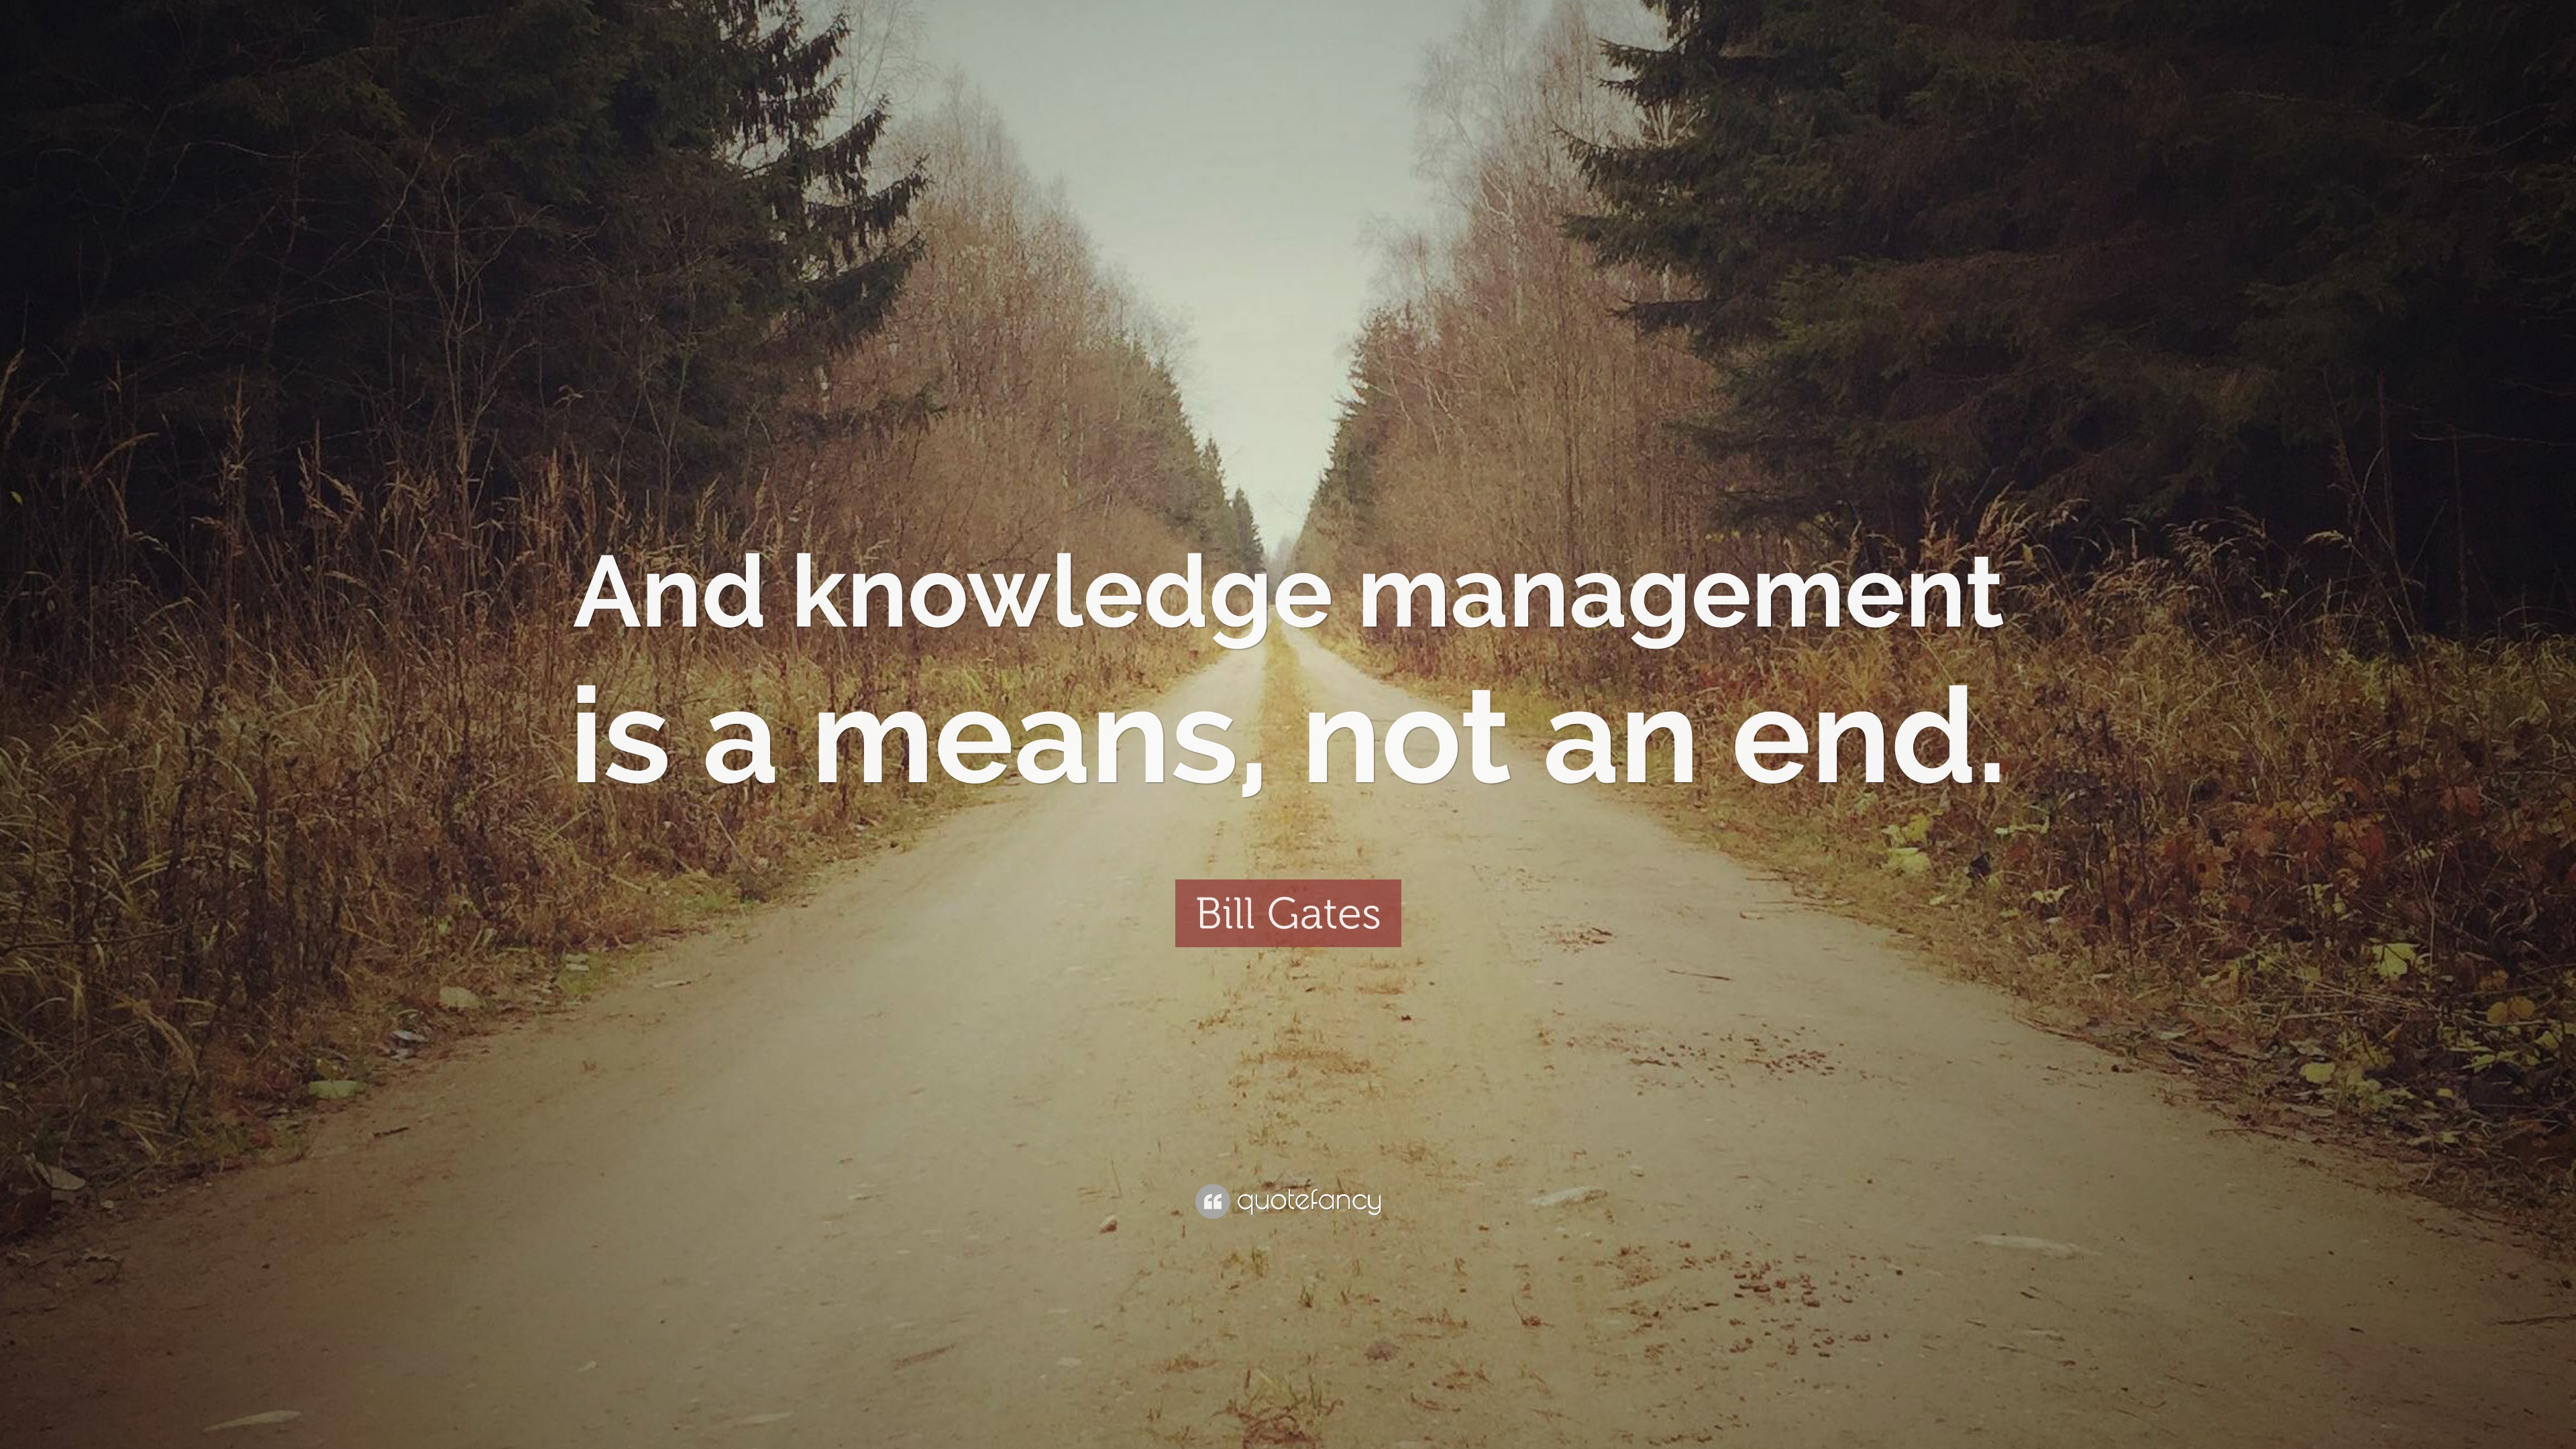 gates_knowledge_management.jpg